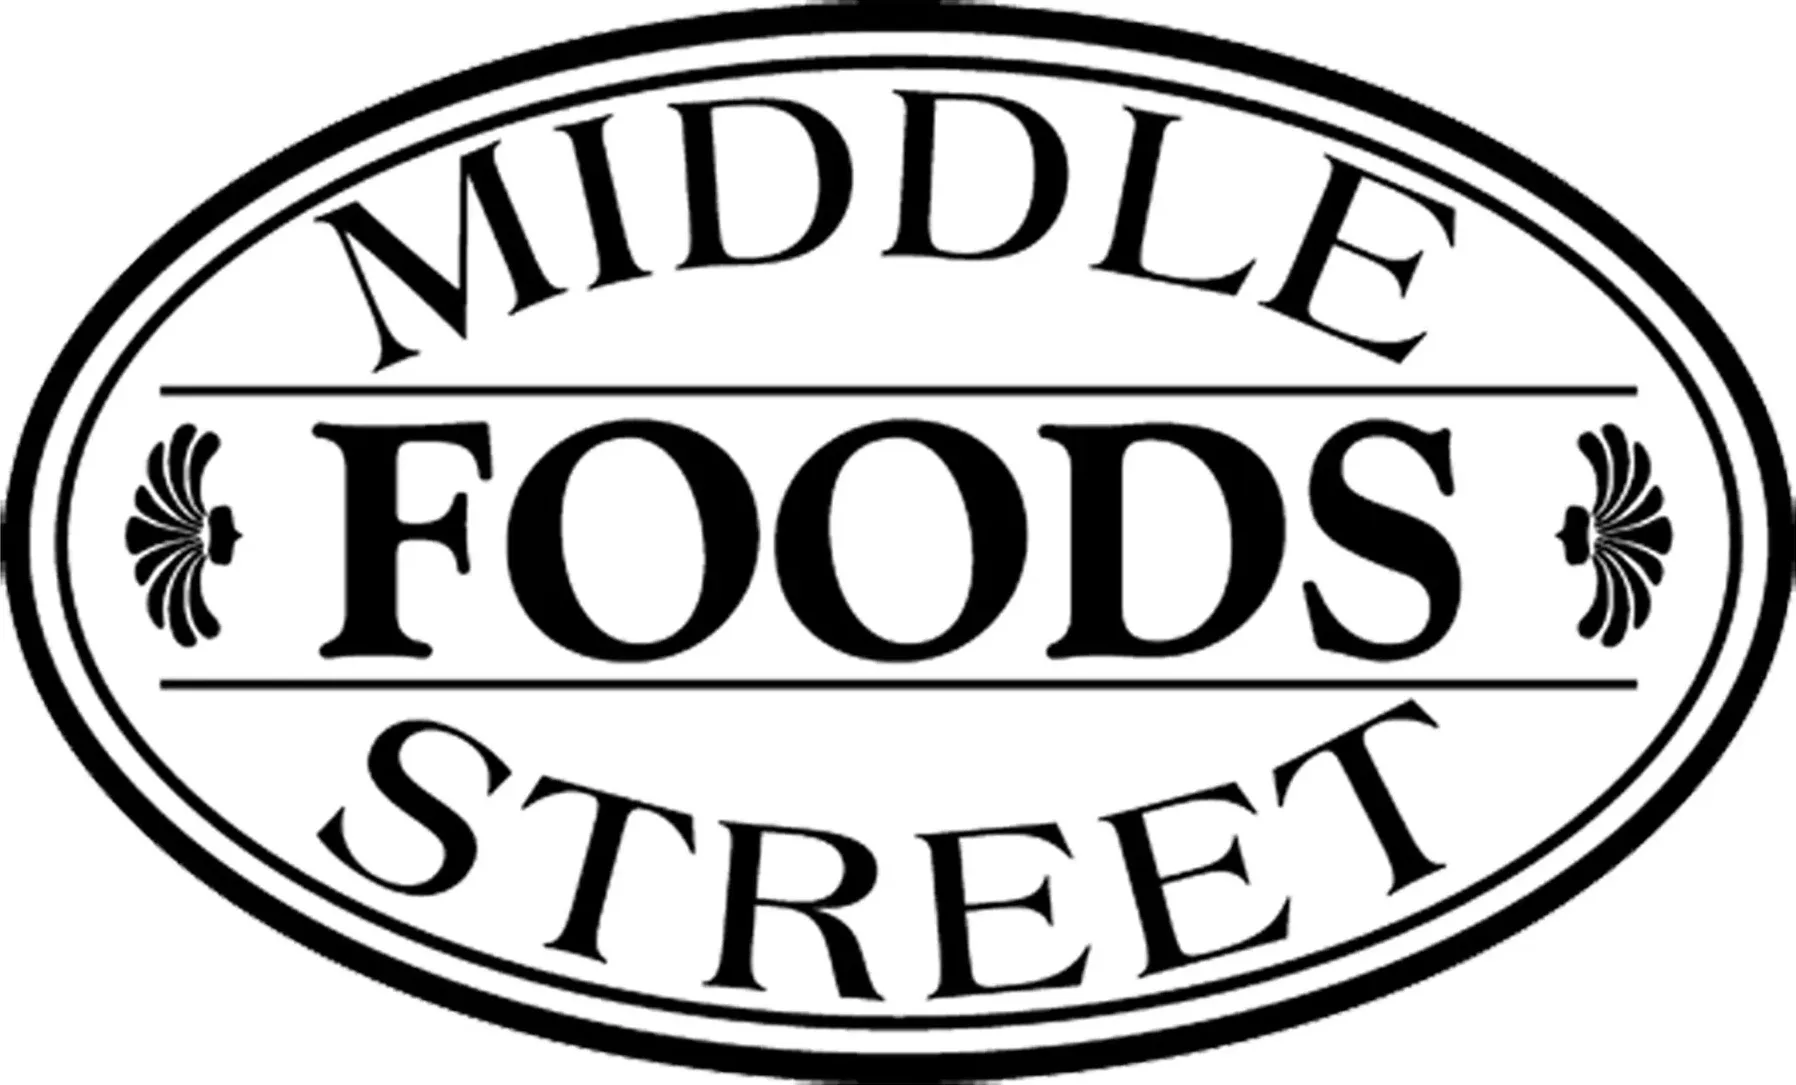 Middle Street Foods logo